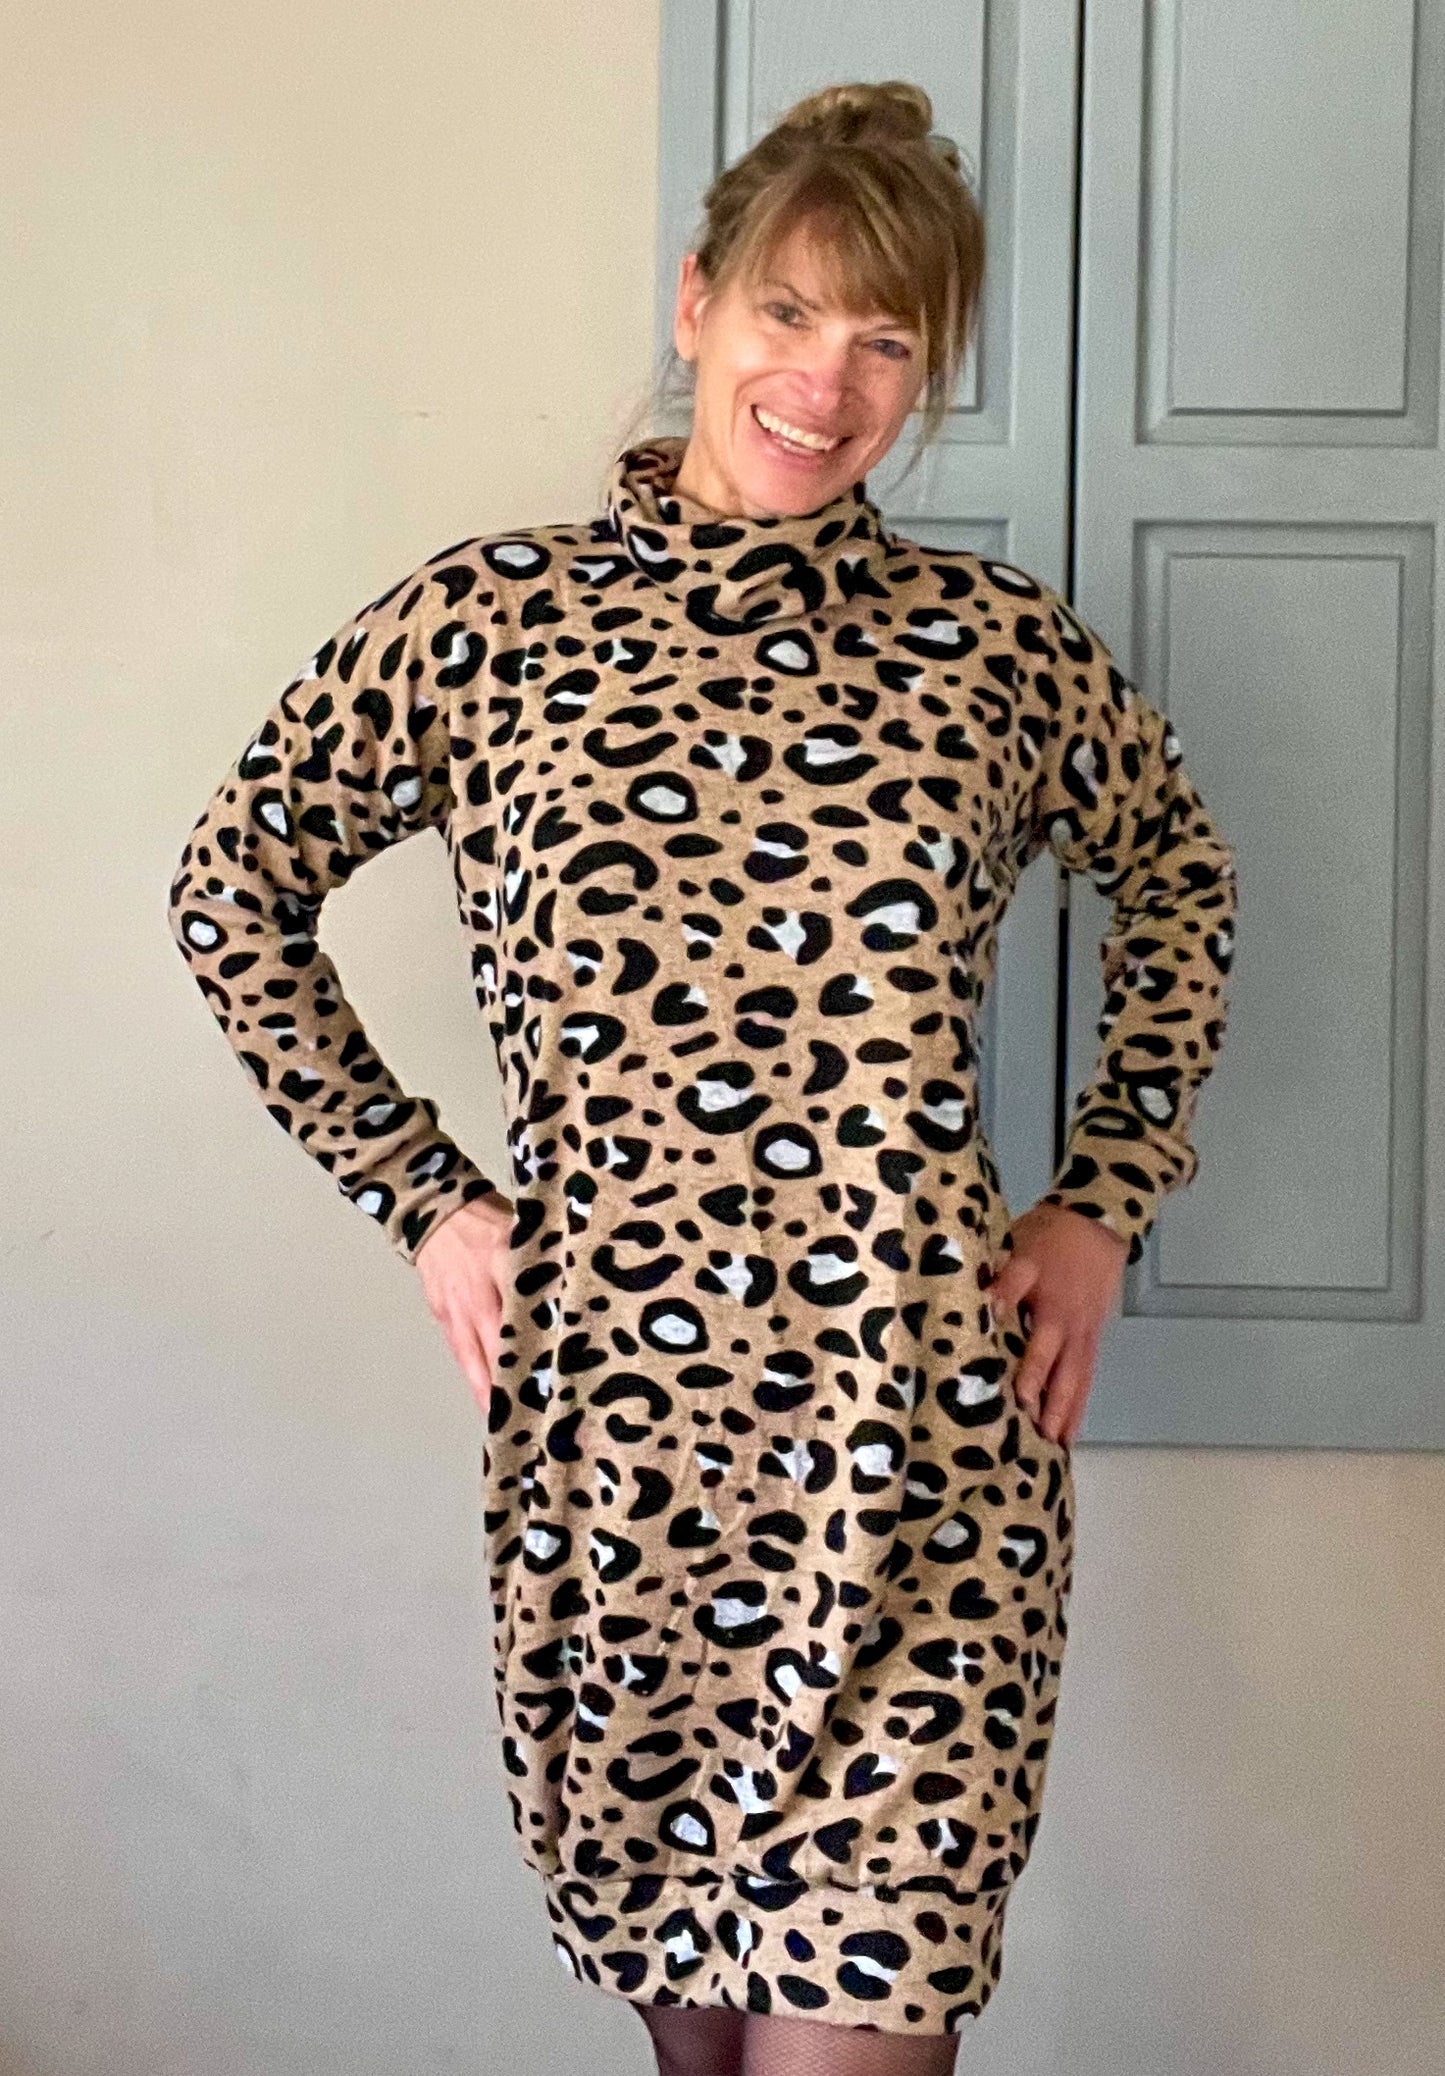 image of person wearing leopard turtleneck sweater dress